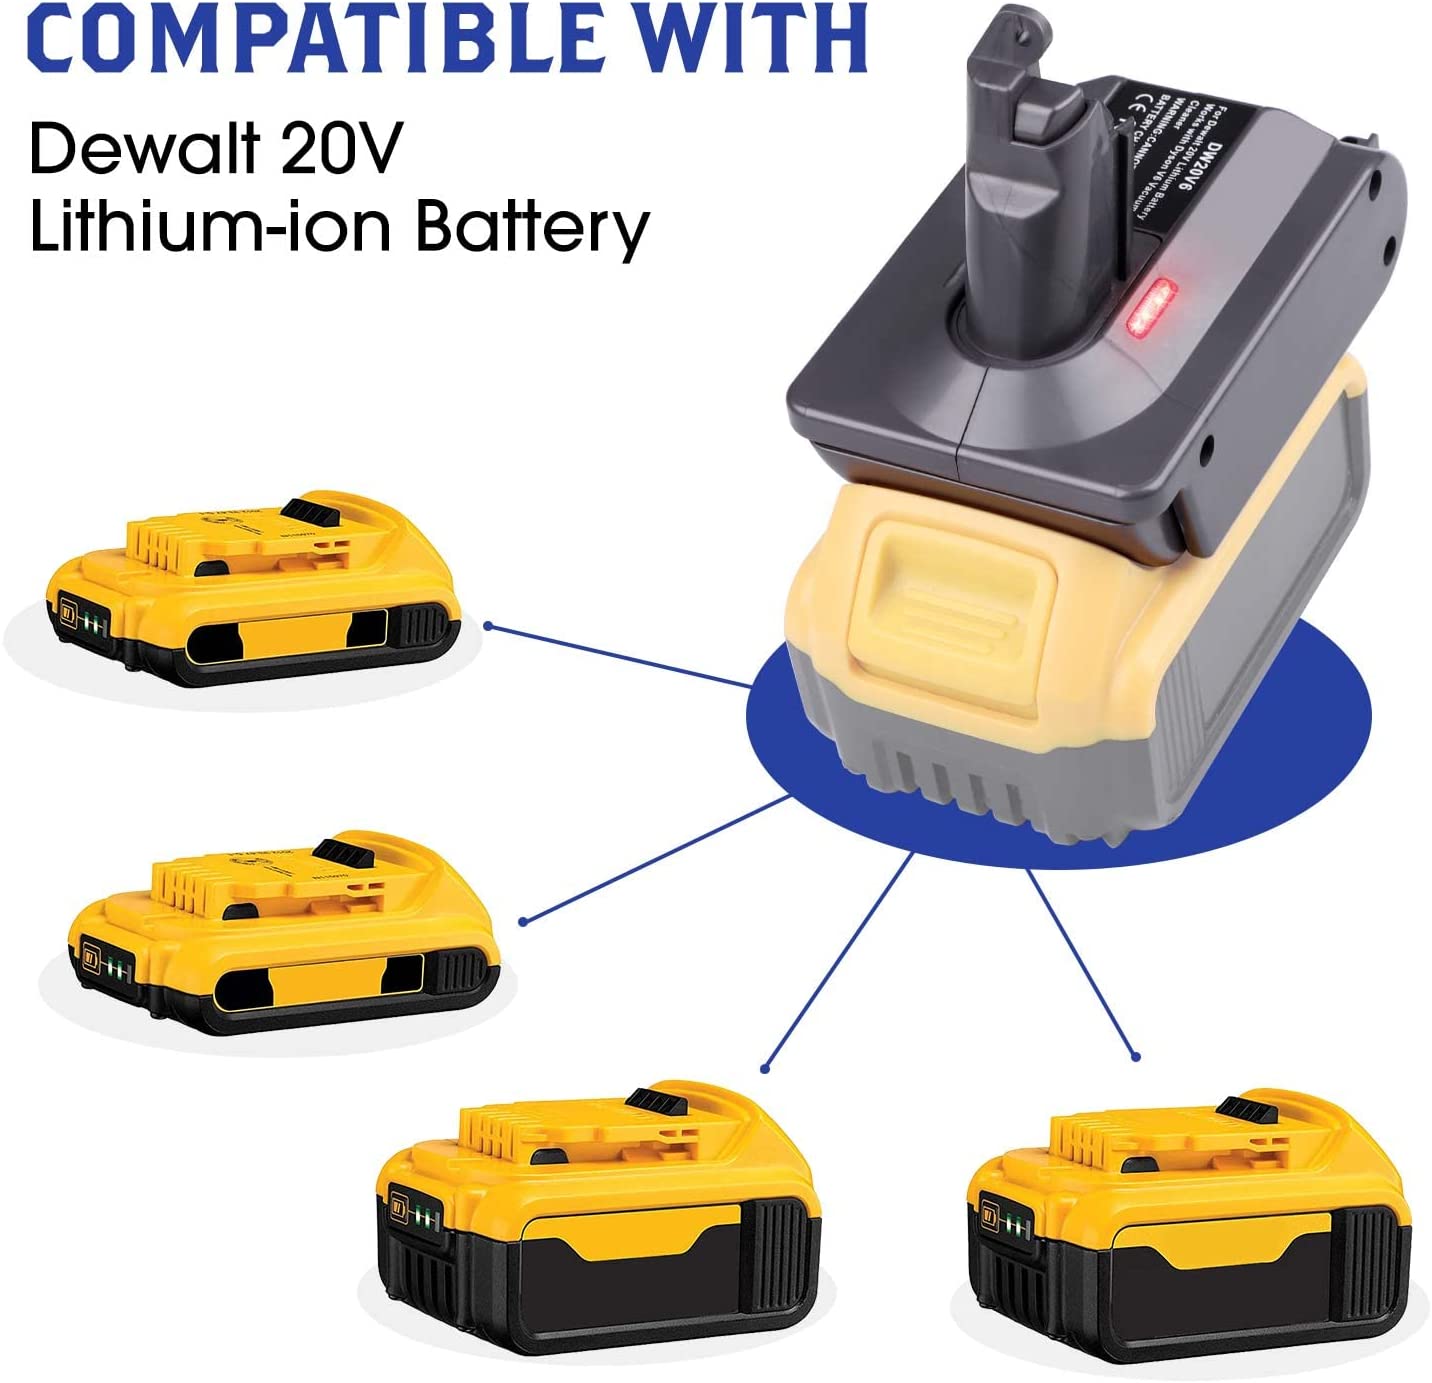 Dyson-batteryadapter vir Dewalt 20V-litiumbattery omgeskakel na Dyson V7-battery